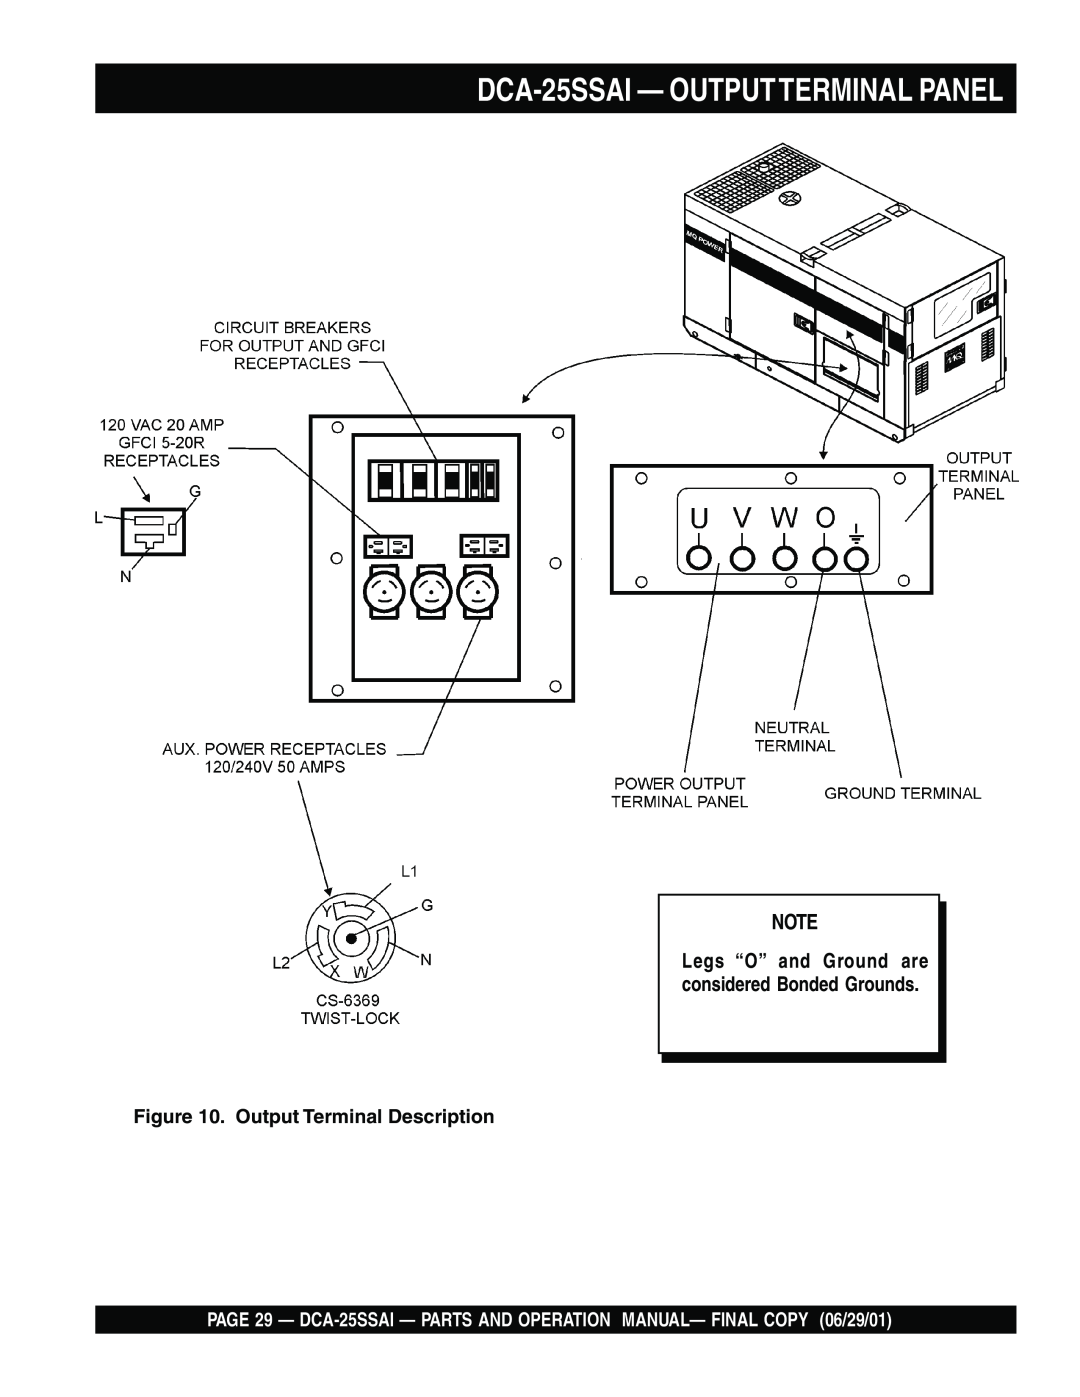 Multiquip operation manual DCA-25SSAI - OUTPUTTERMINAL PANEL, Output Terminal Description 